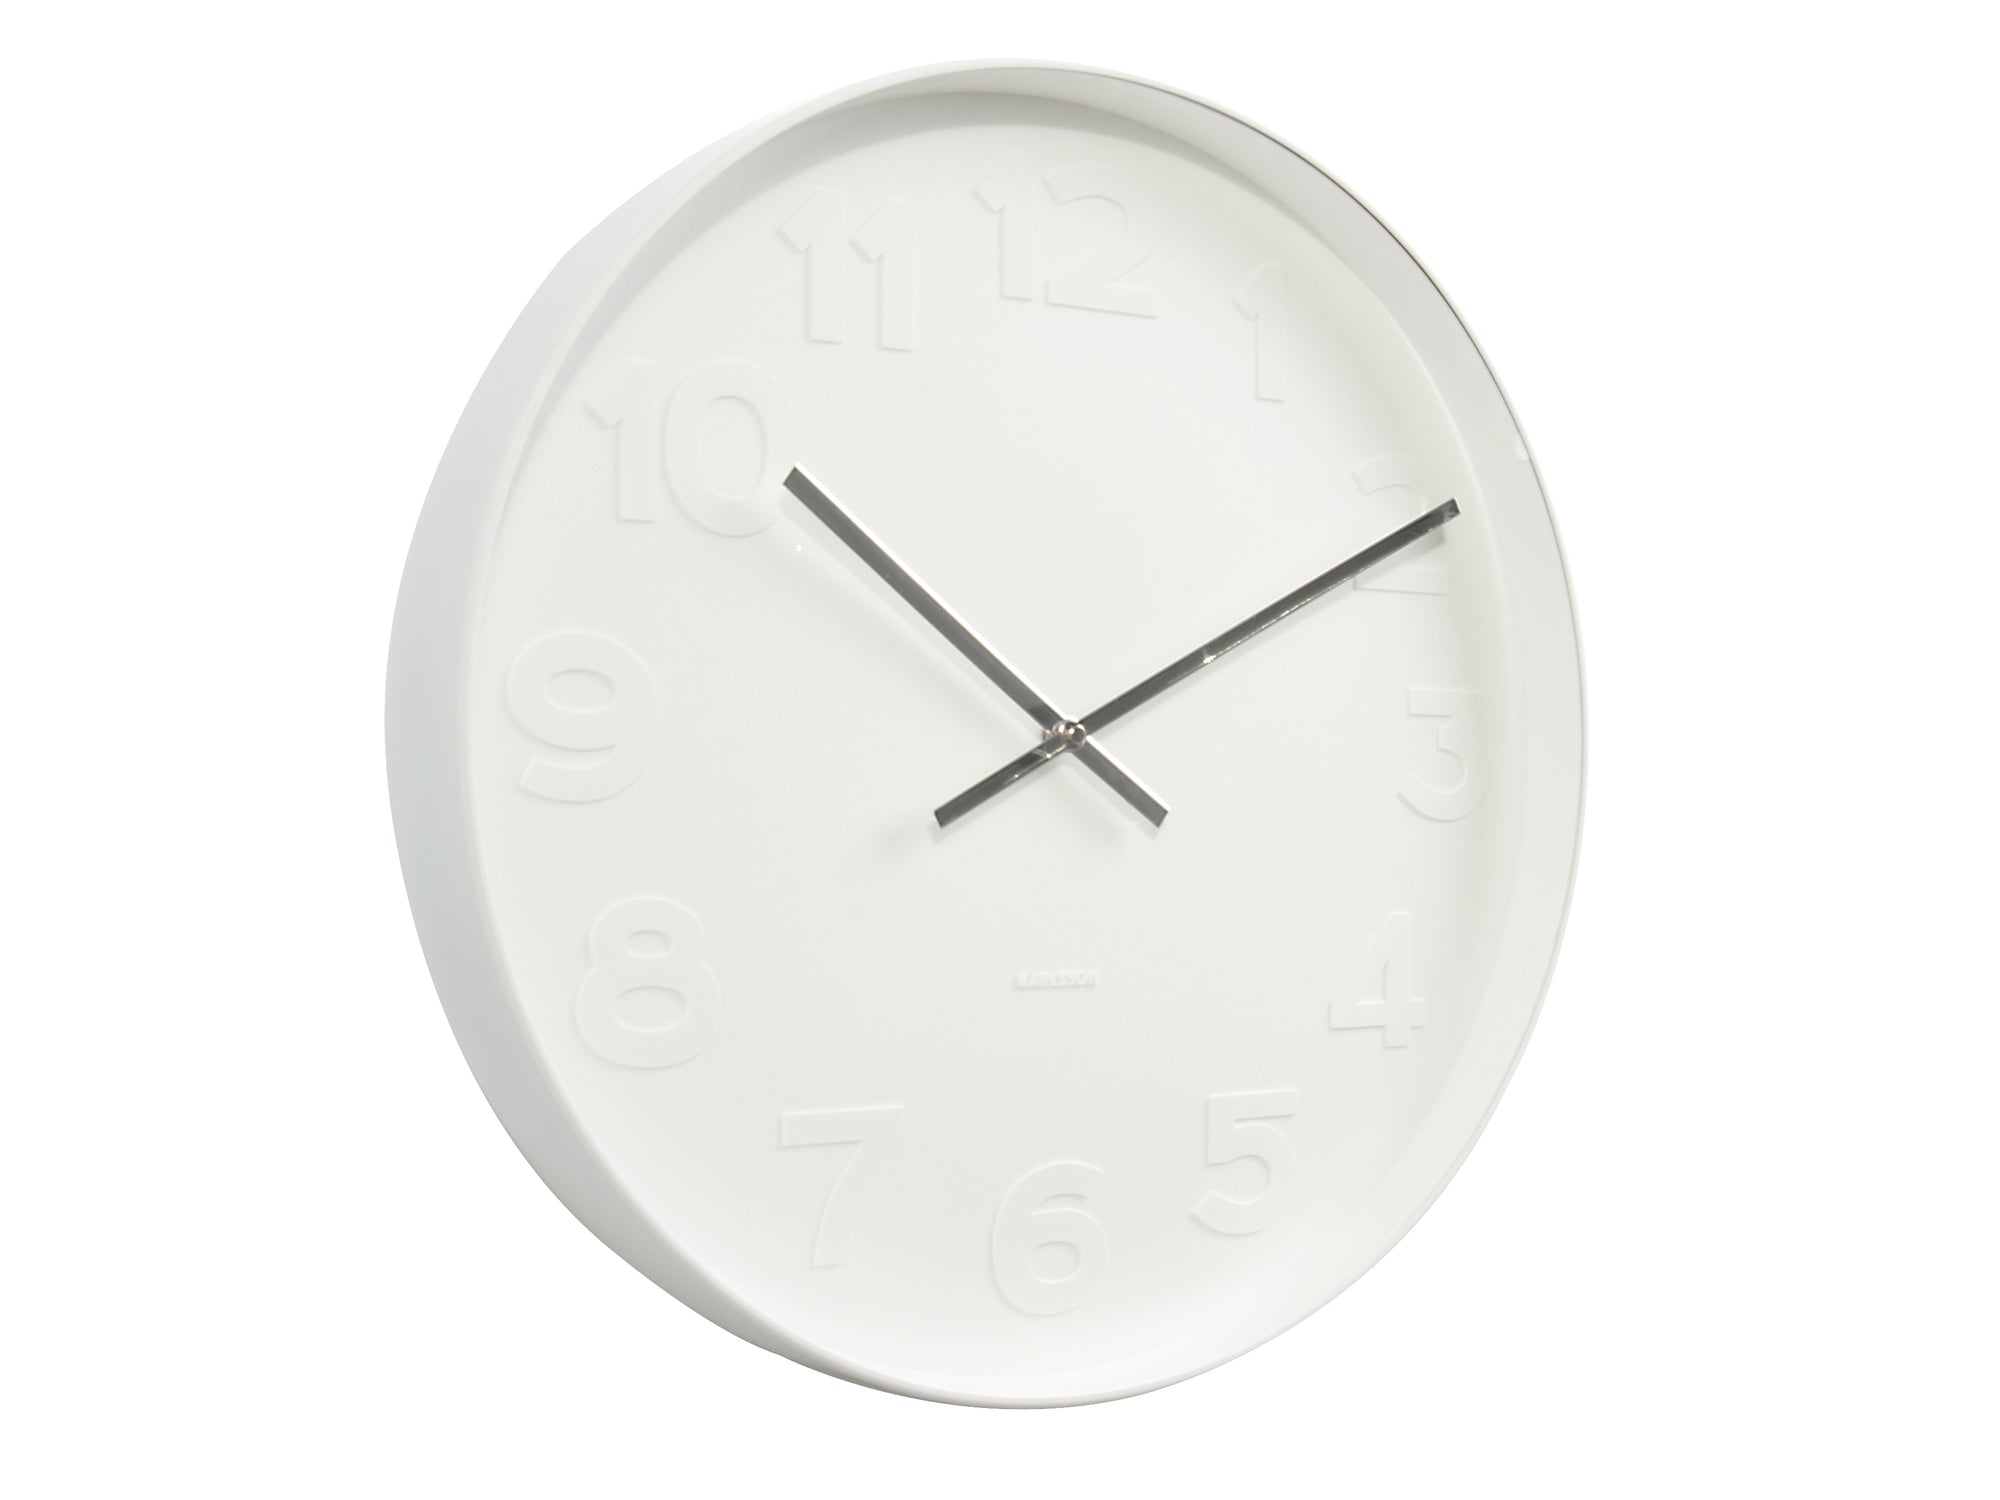 White wall clock